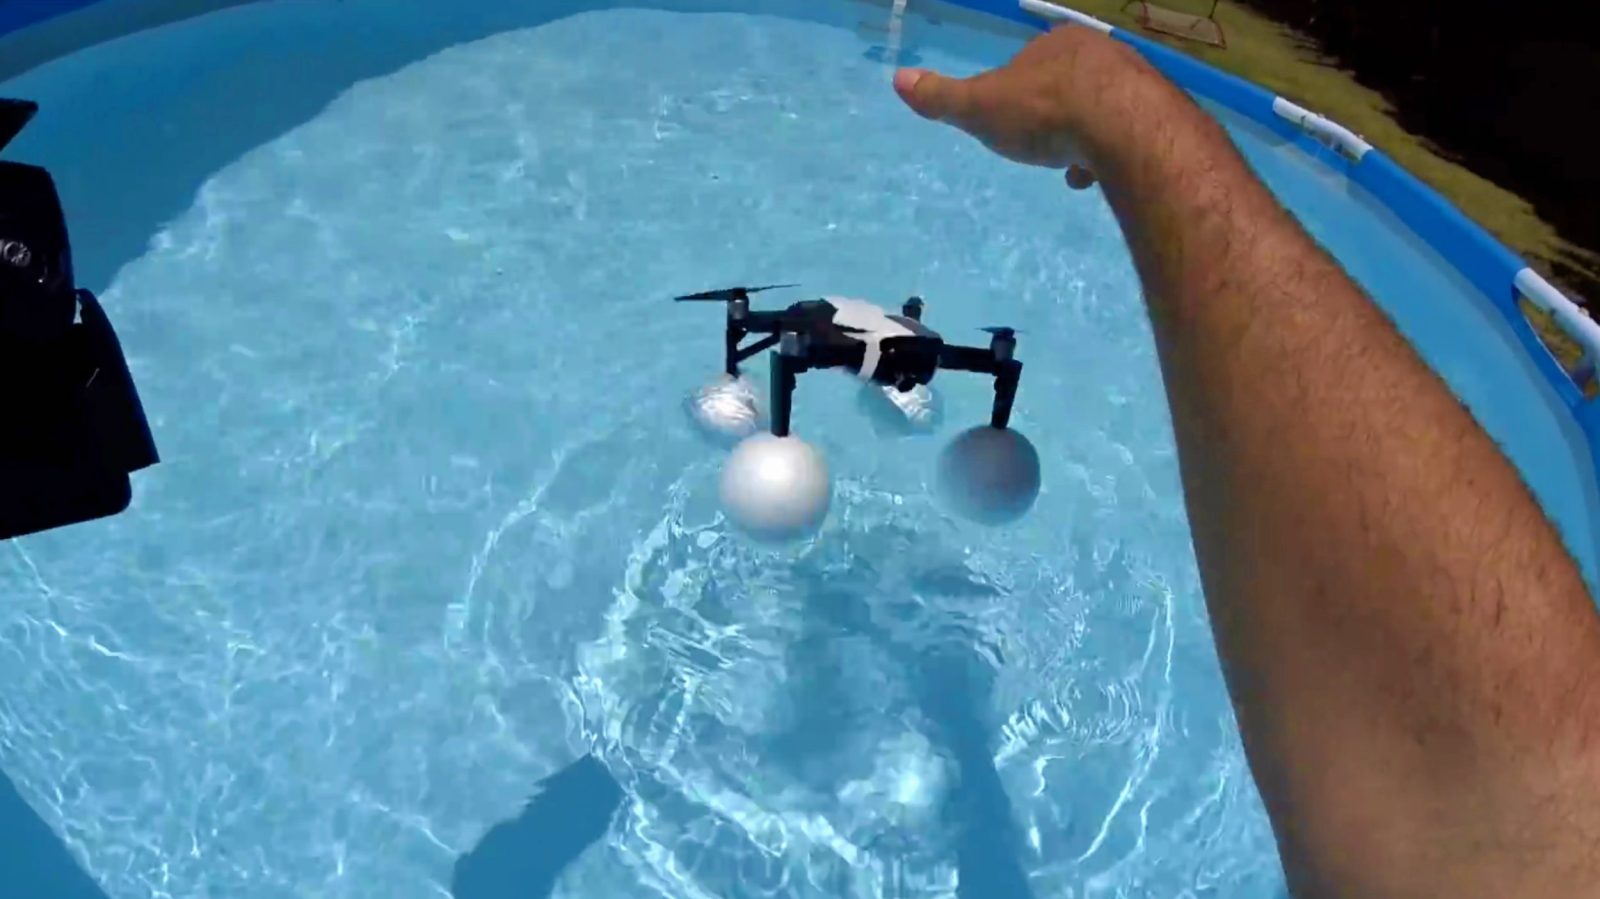 DJI Mavic Air survives being submerged during test with water landing gear [video]